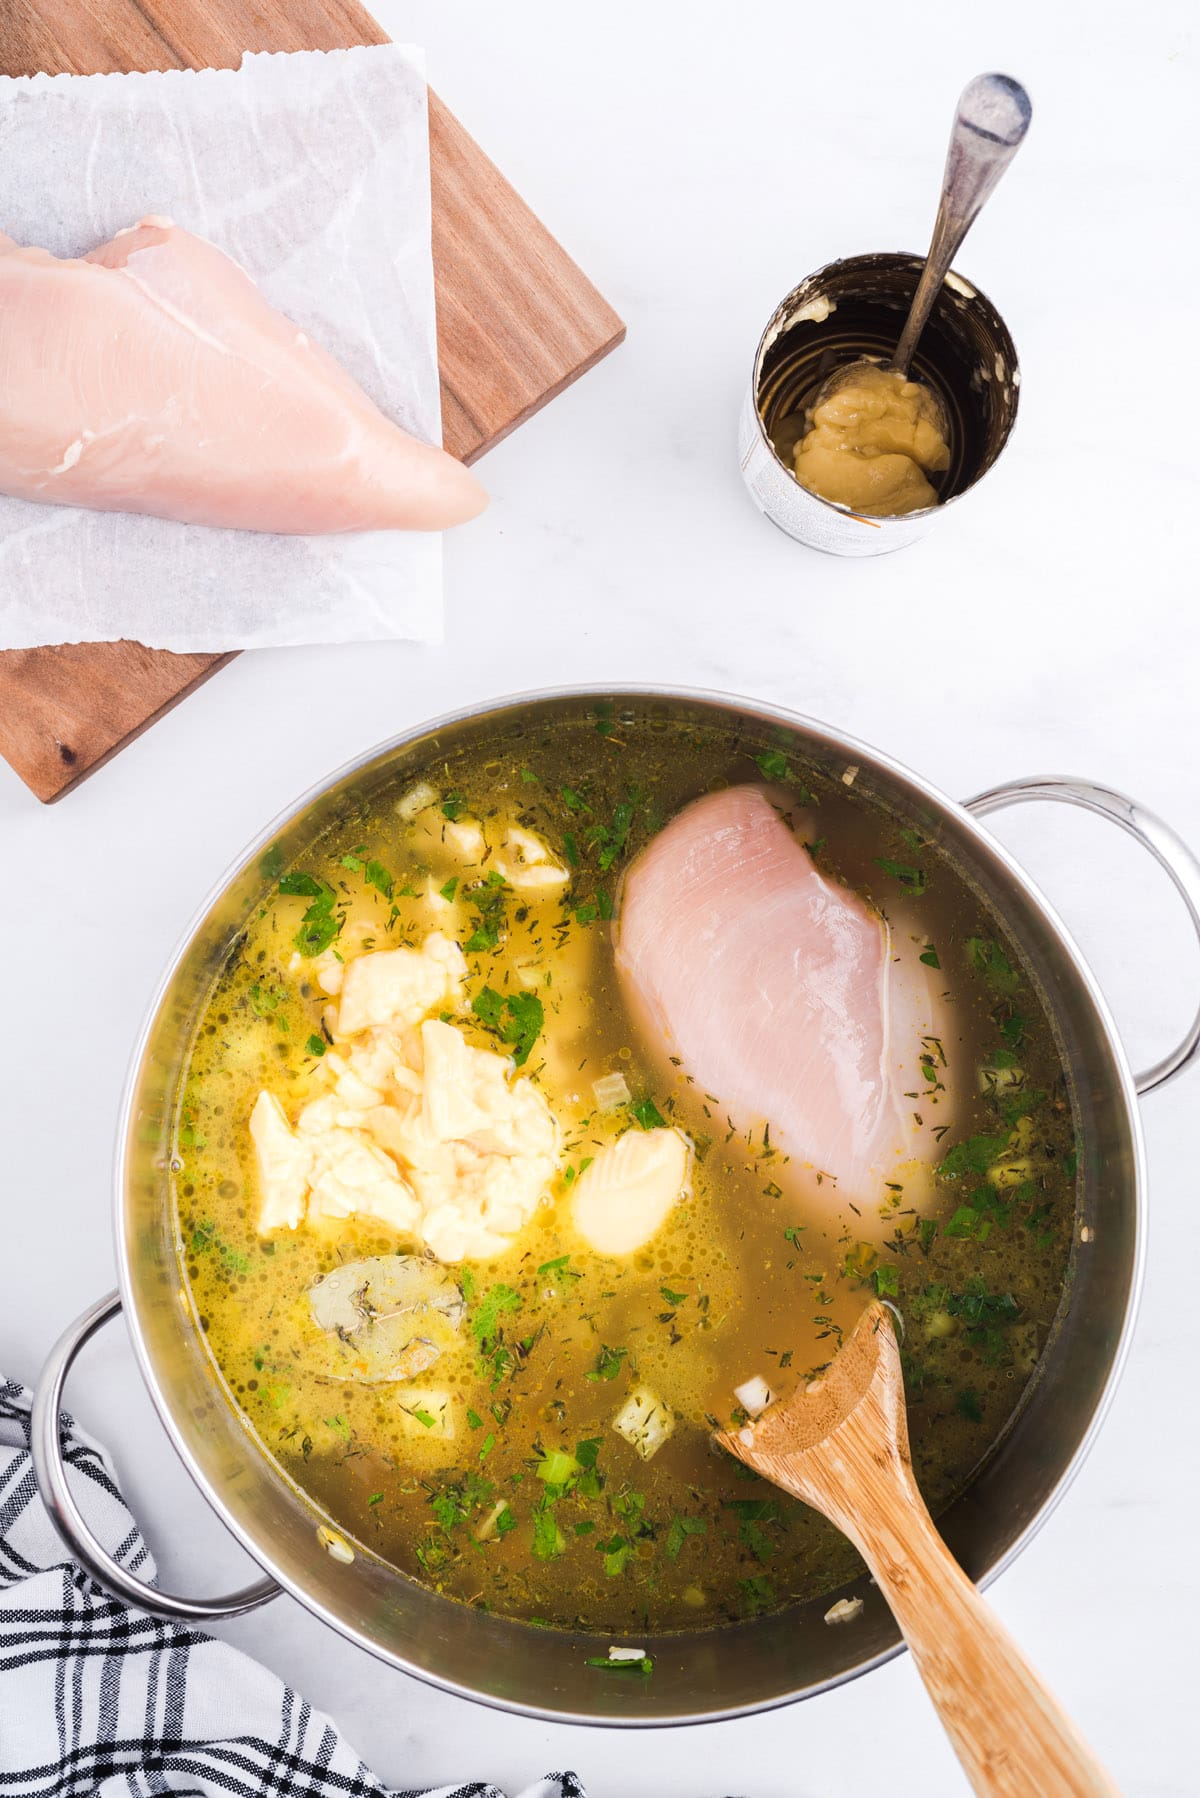 Add chicken broth, cream of chicken soup, and raw chicken breasts